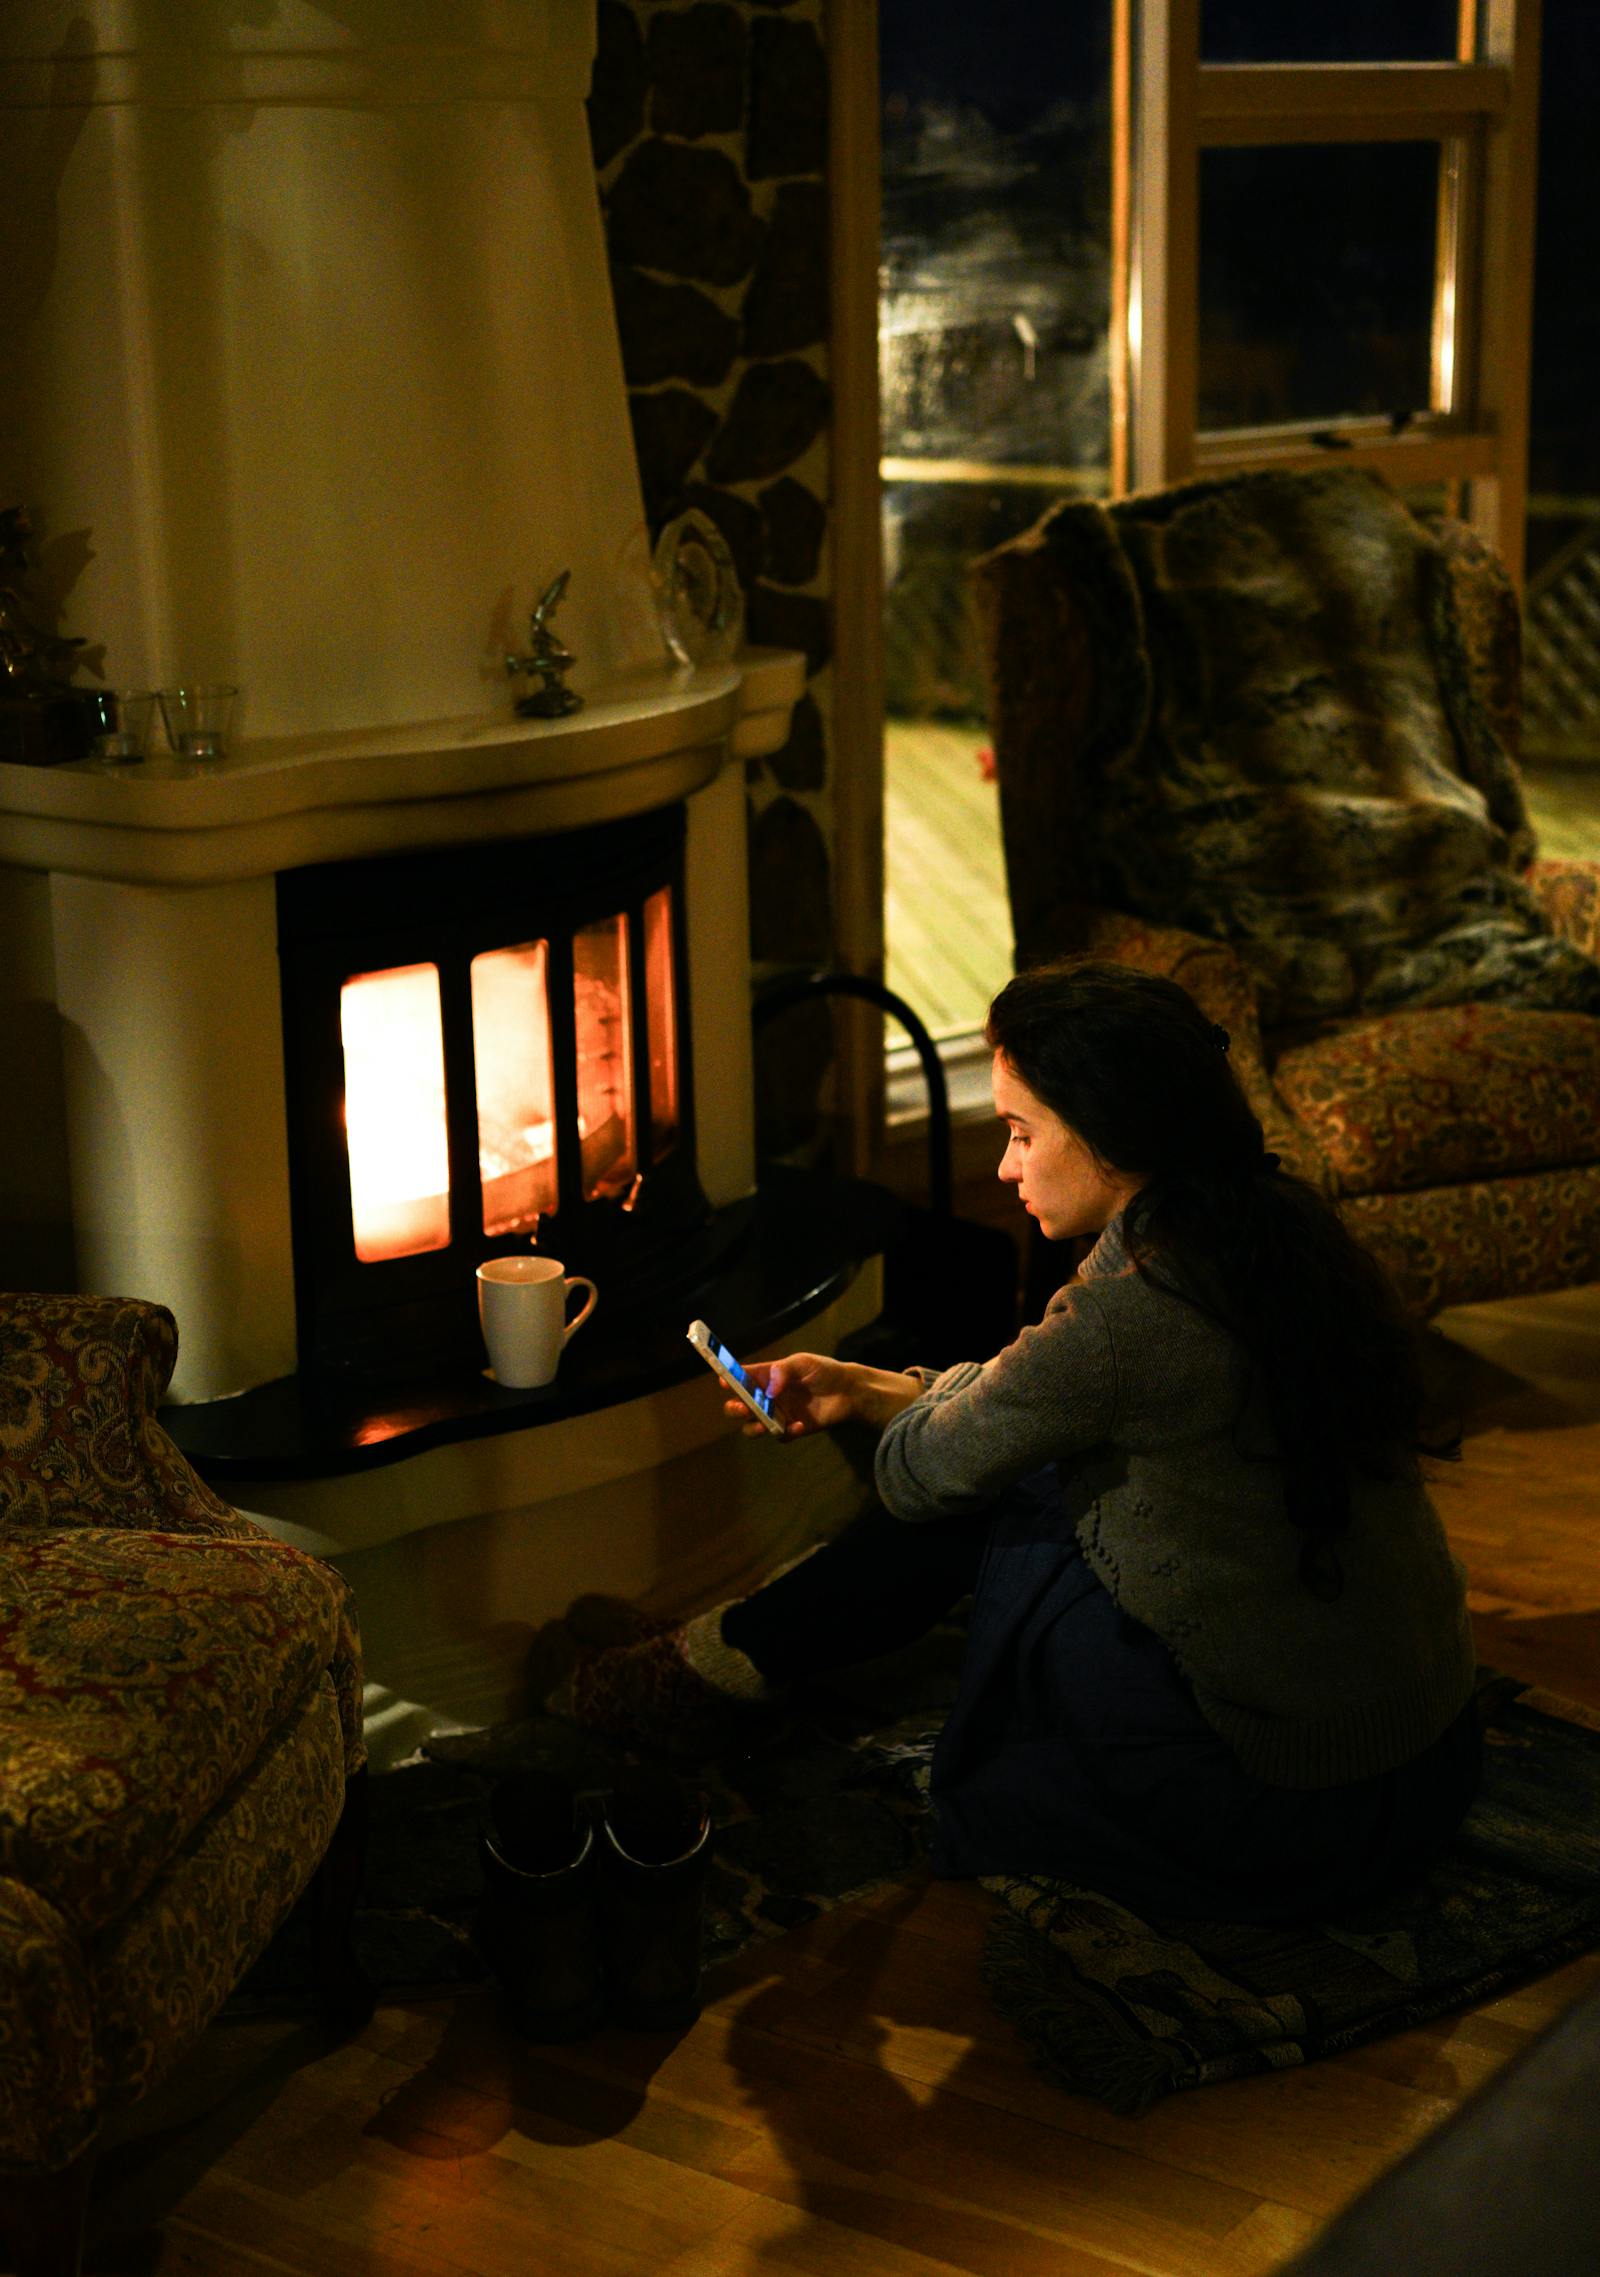 fireplace gadget image